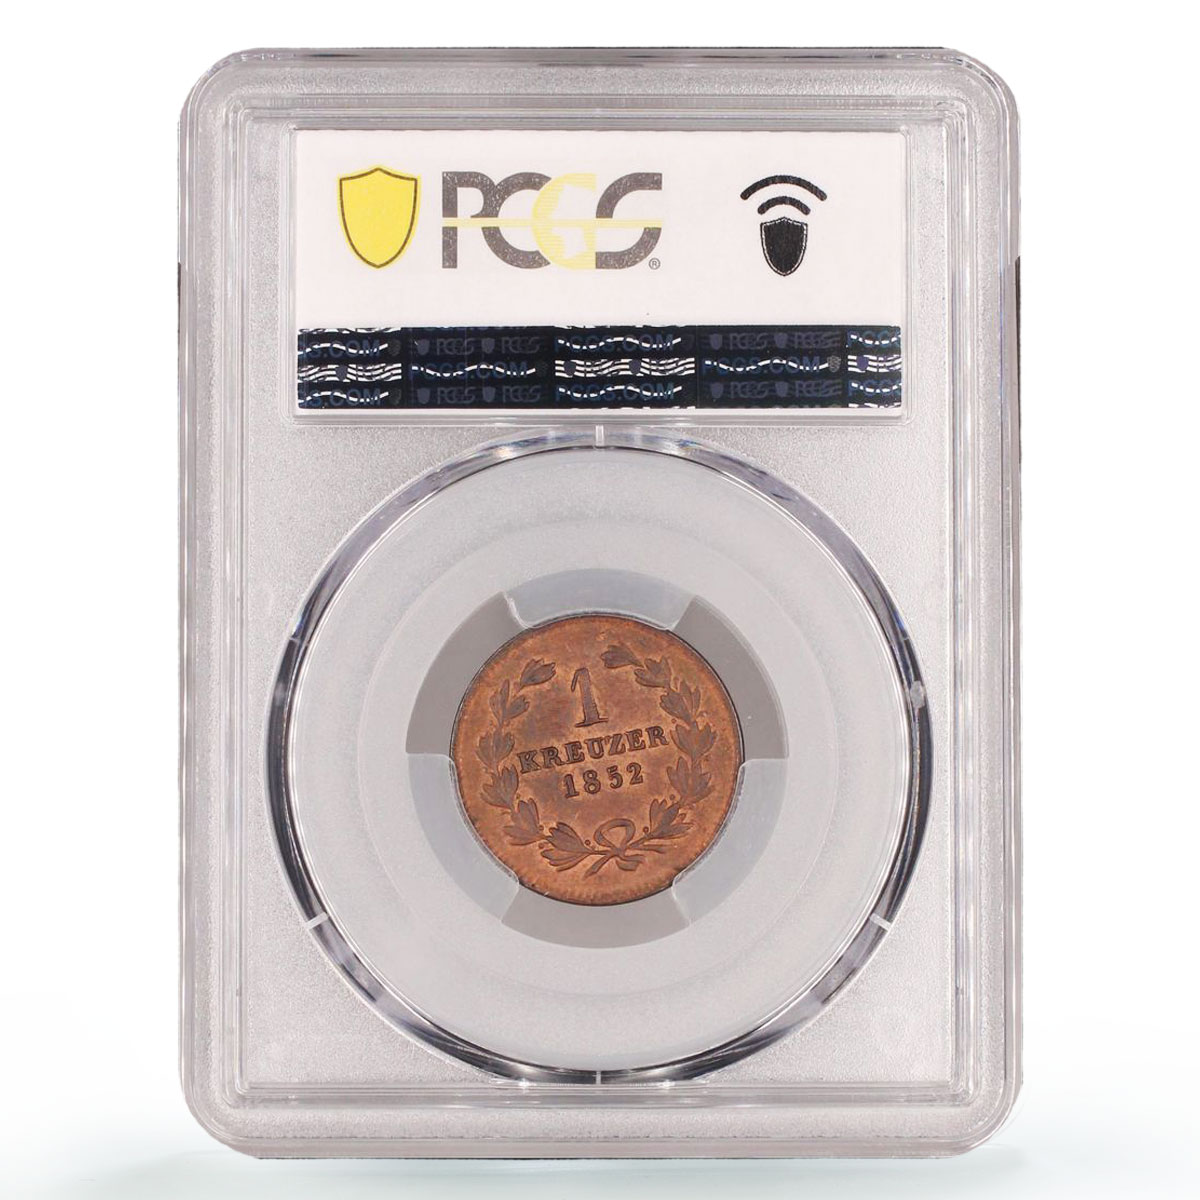 Germany Baden 1 kreuzer Regular Coinage Duke Leopold MS63 PCGS copper coin 1852